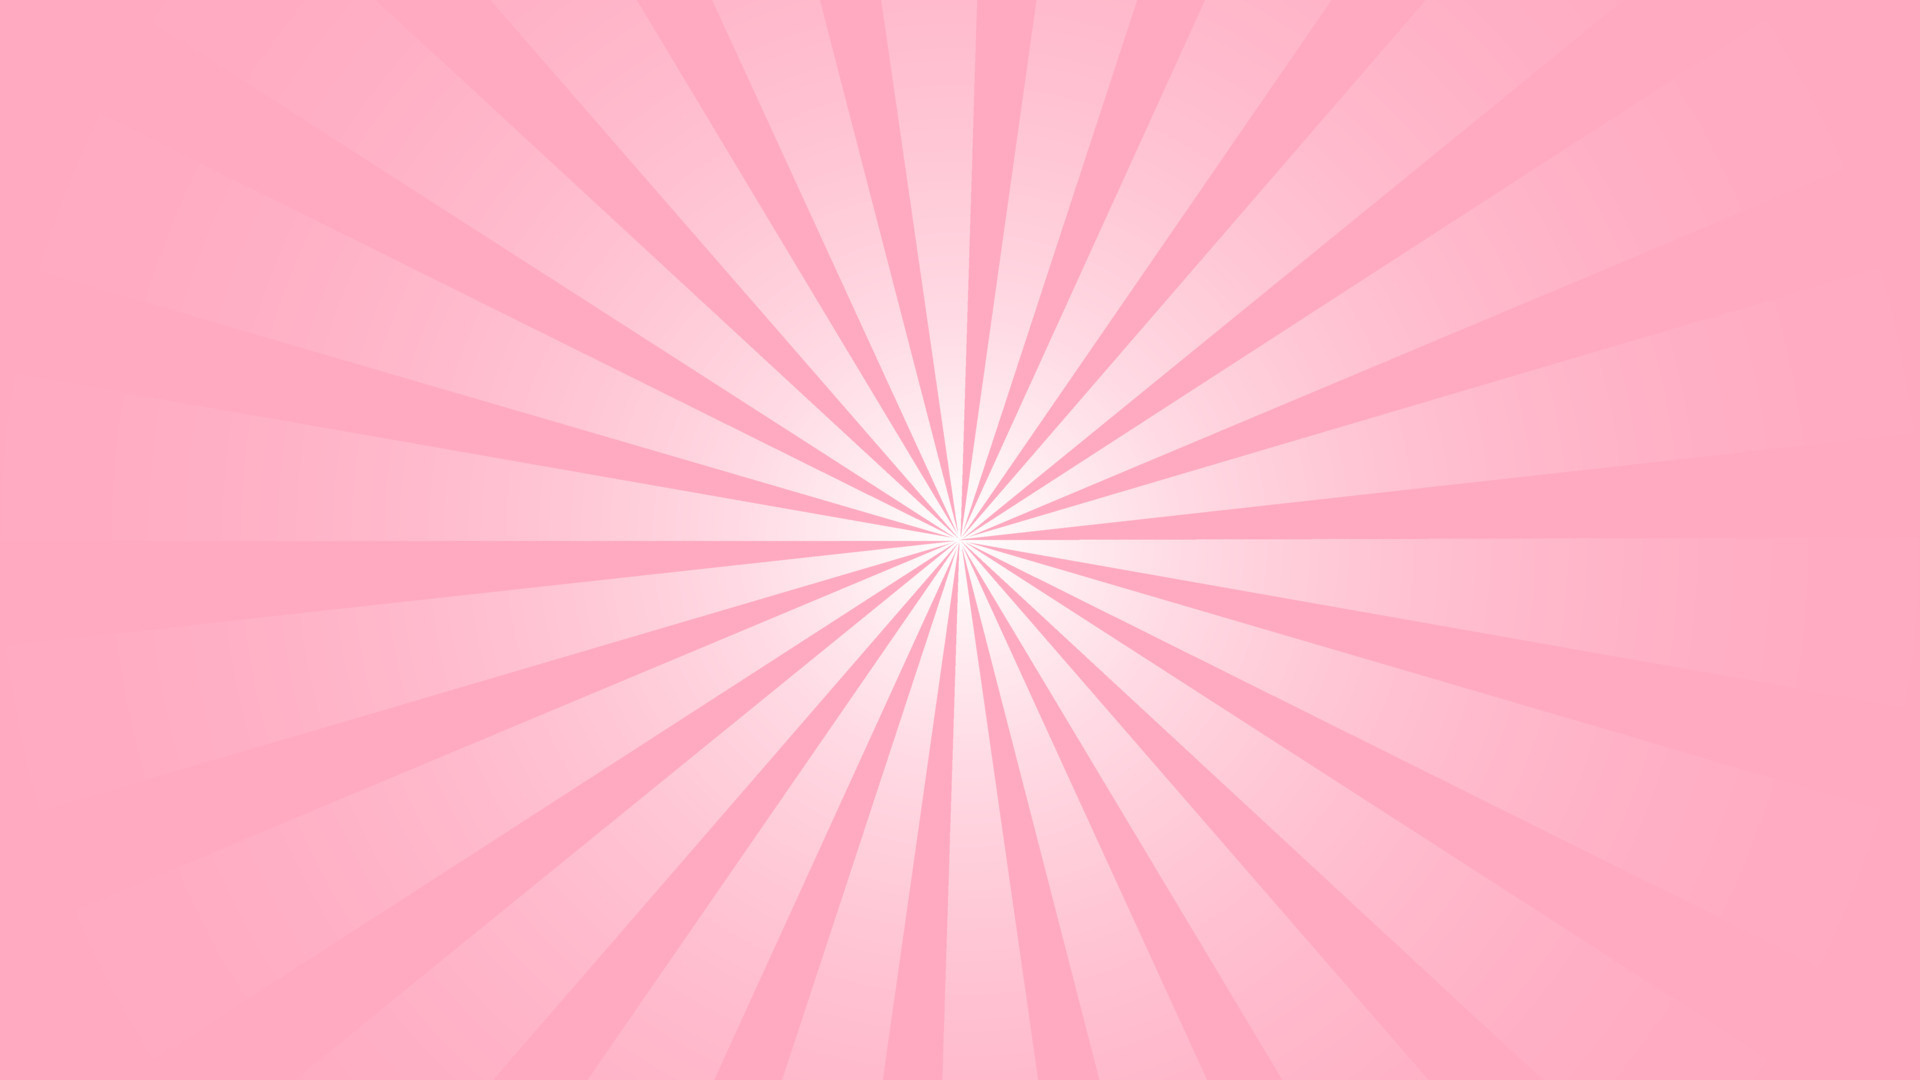 aesthetic soft pink spiral sunburst background illustration, perfect for  backdrop, wallpaper, banner, postcard, background for your design 14526817  Vector Art at Vecteezy